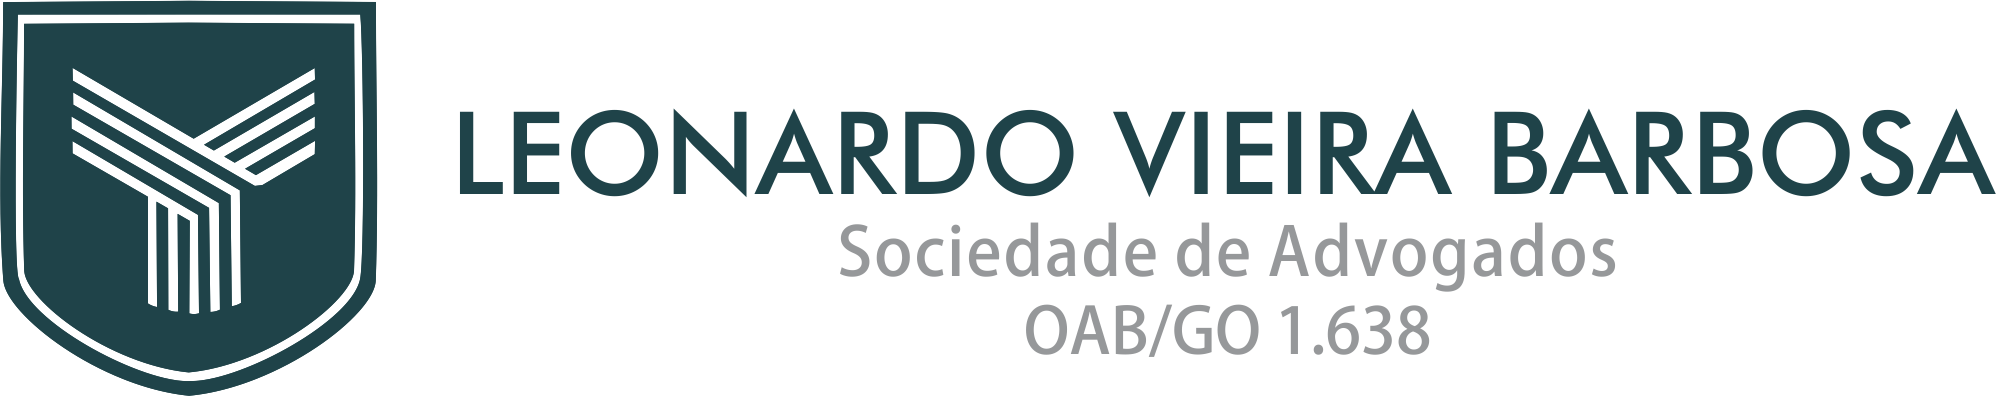 Leonardo Vieira Barbosa Sociedade de Advogados